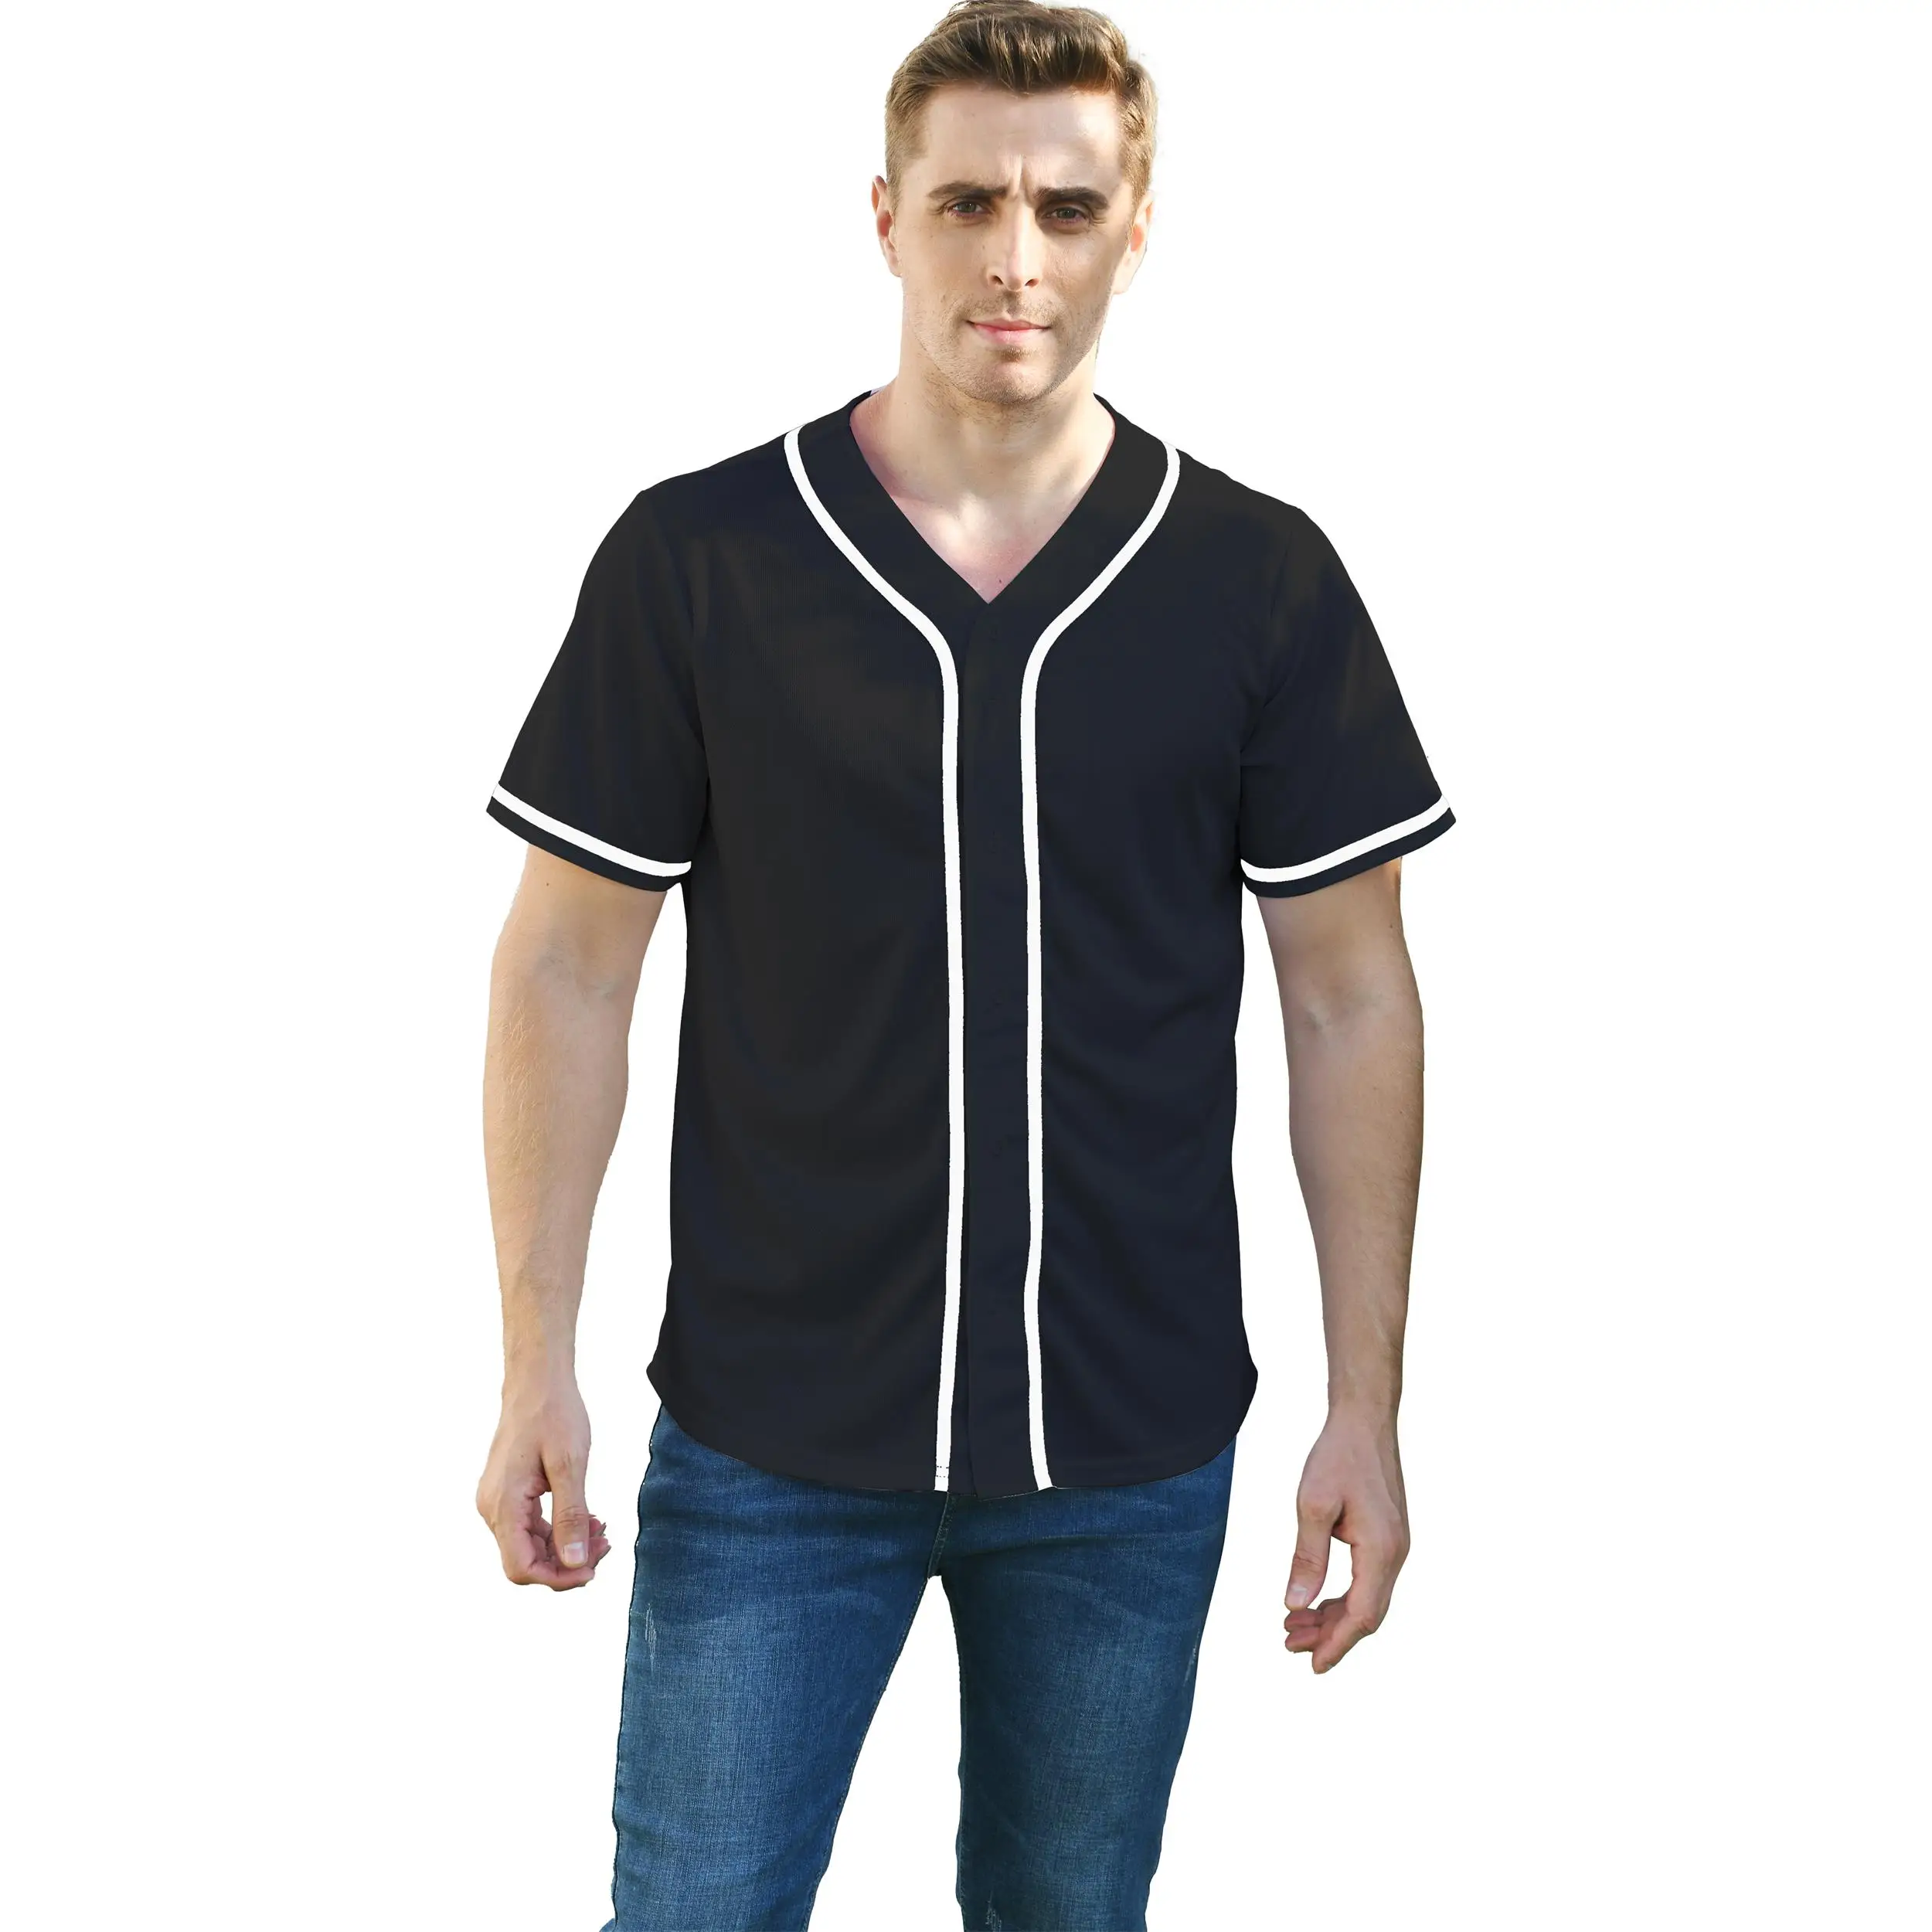 New men's T-shirt summer style fashion streetwear hip hop baseball uniform  striped shirt men's clothes tyga final king costume - AliExpress